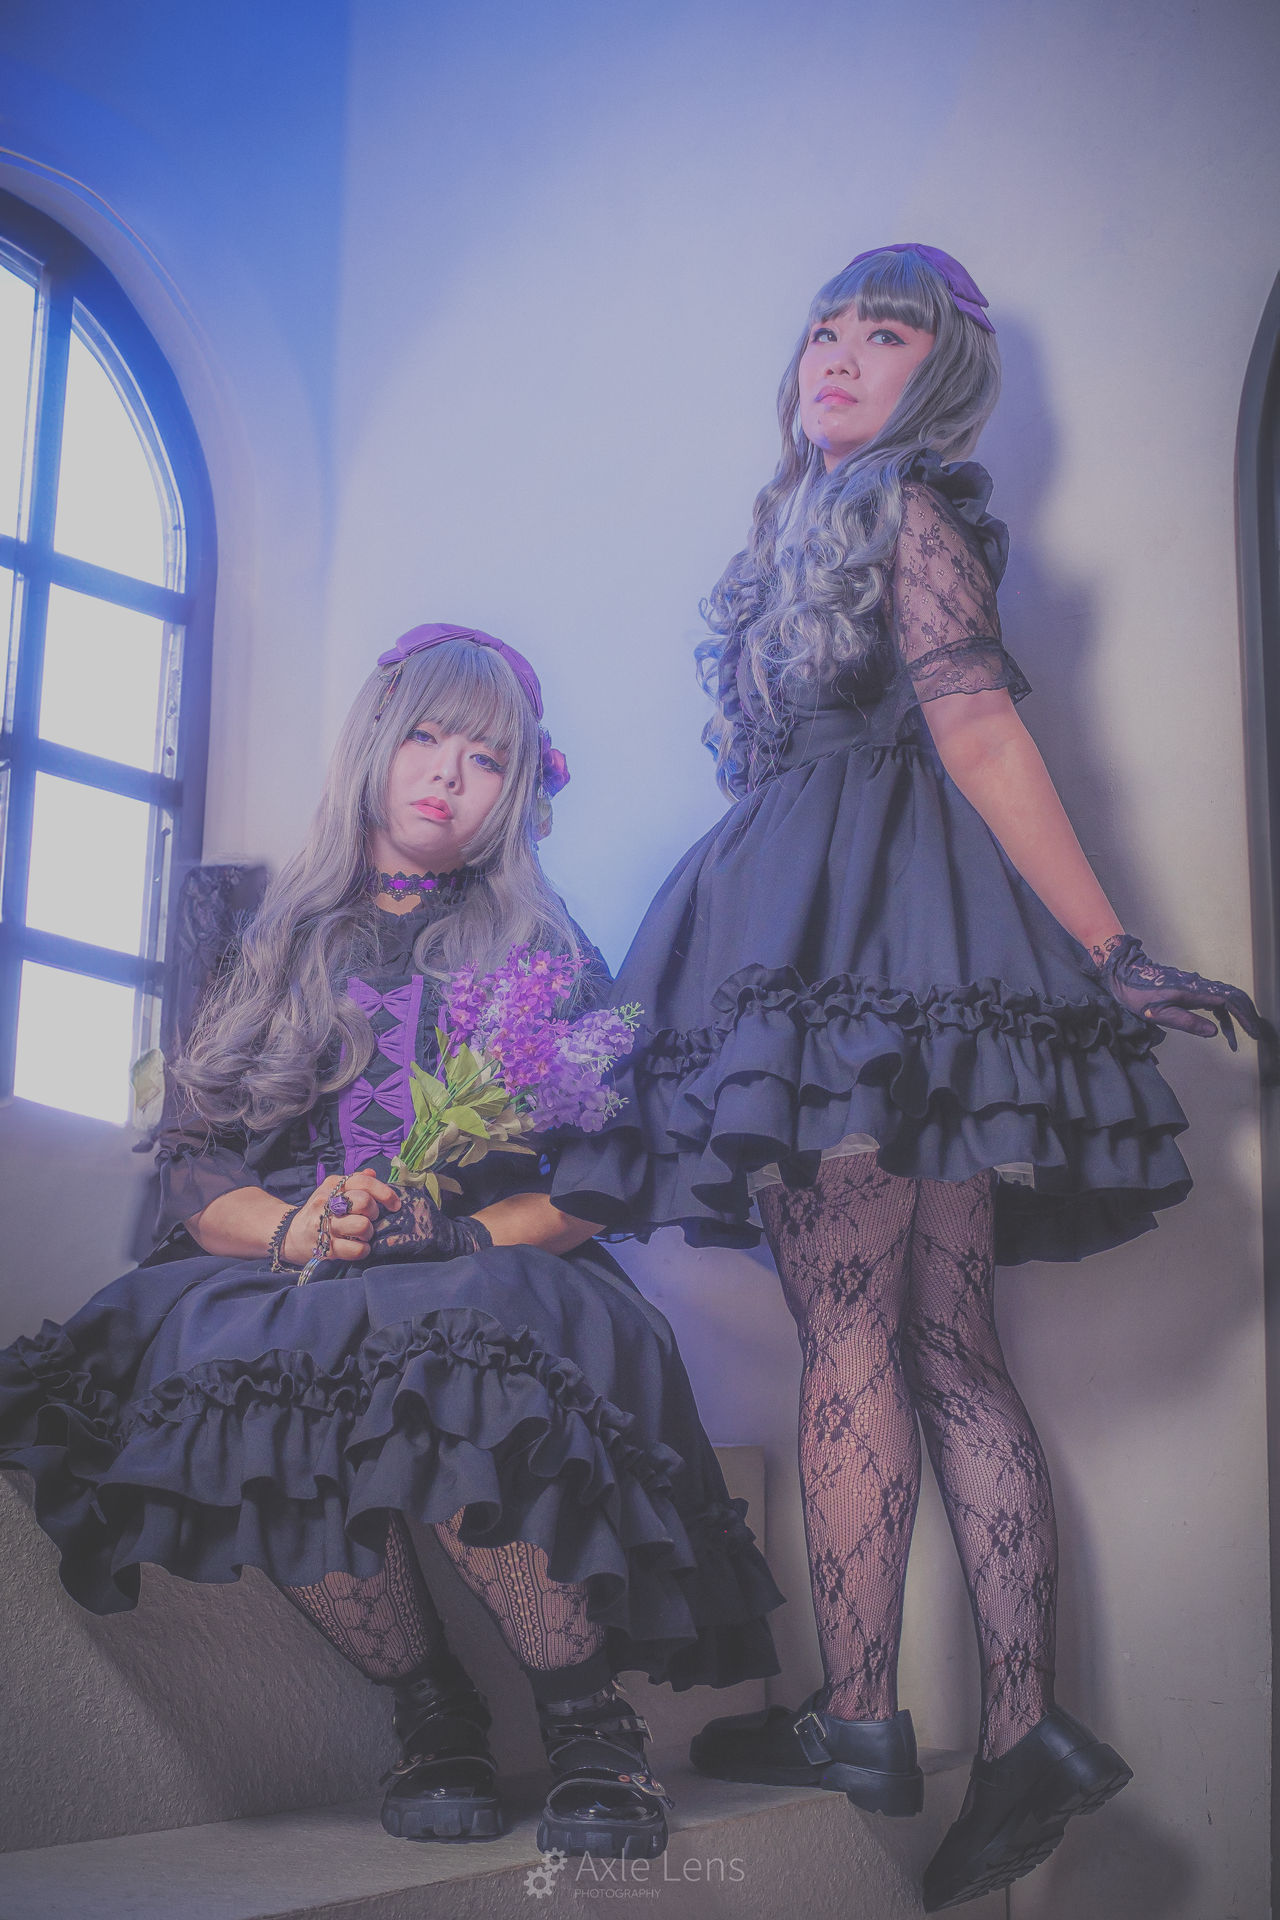 CDA: Lolita Fashion by FullmetalPikachu on DeviantArt